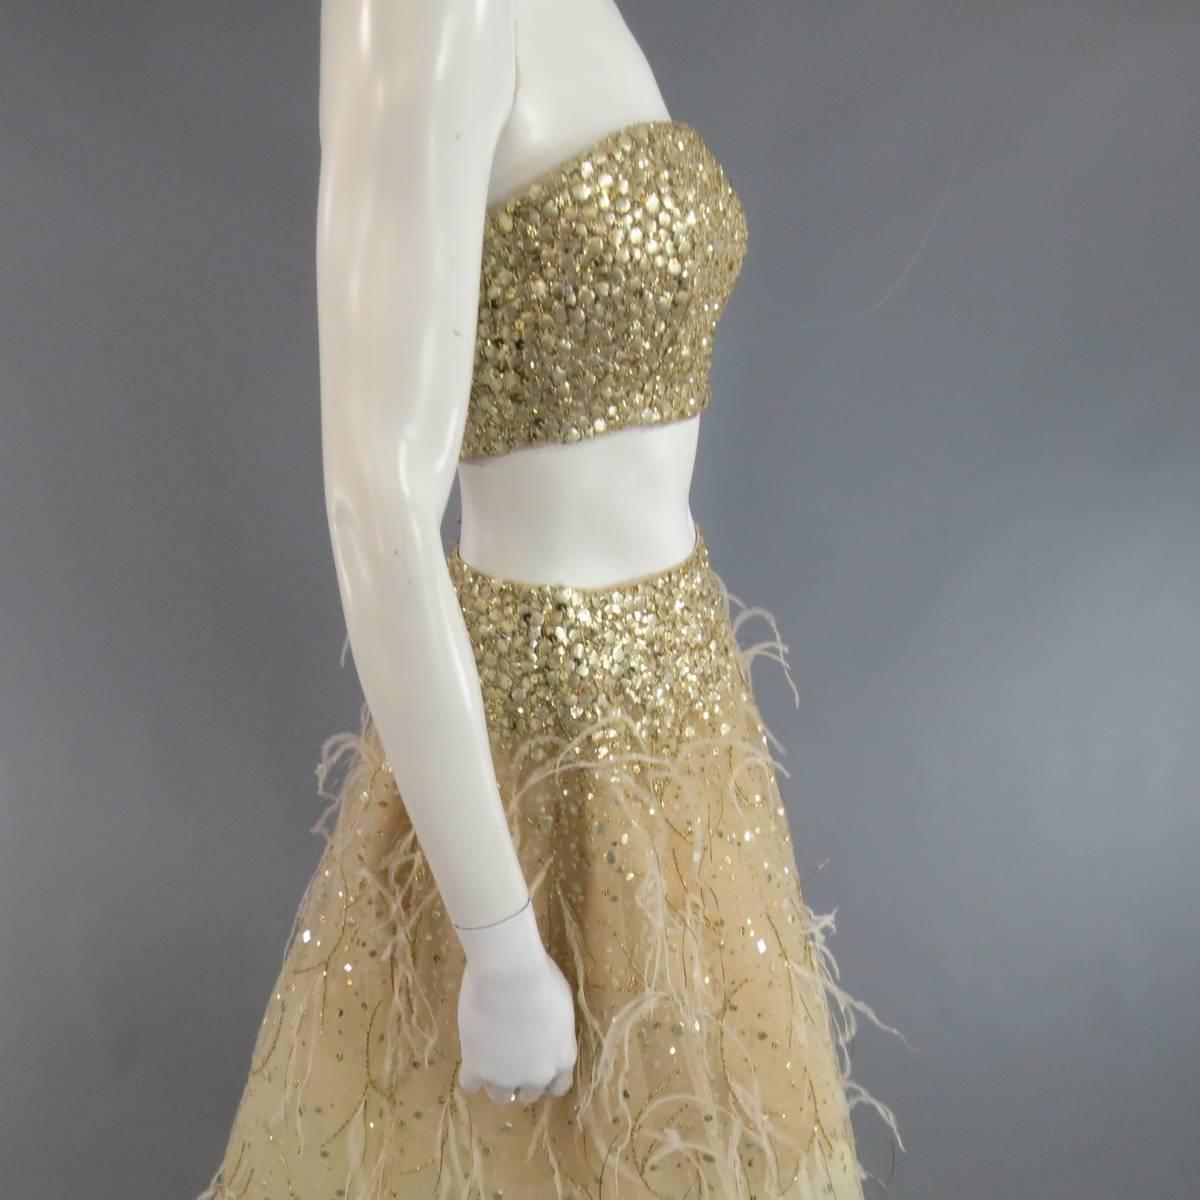 OSCAR DE LA RENTA Spring 2015 4 Gold Feather Tulle Skirt Gold Sequin Bustier Set 2